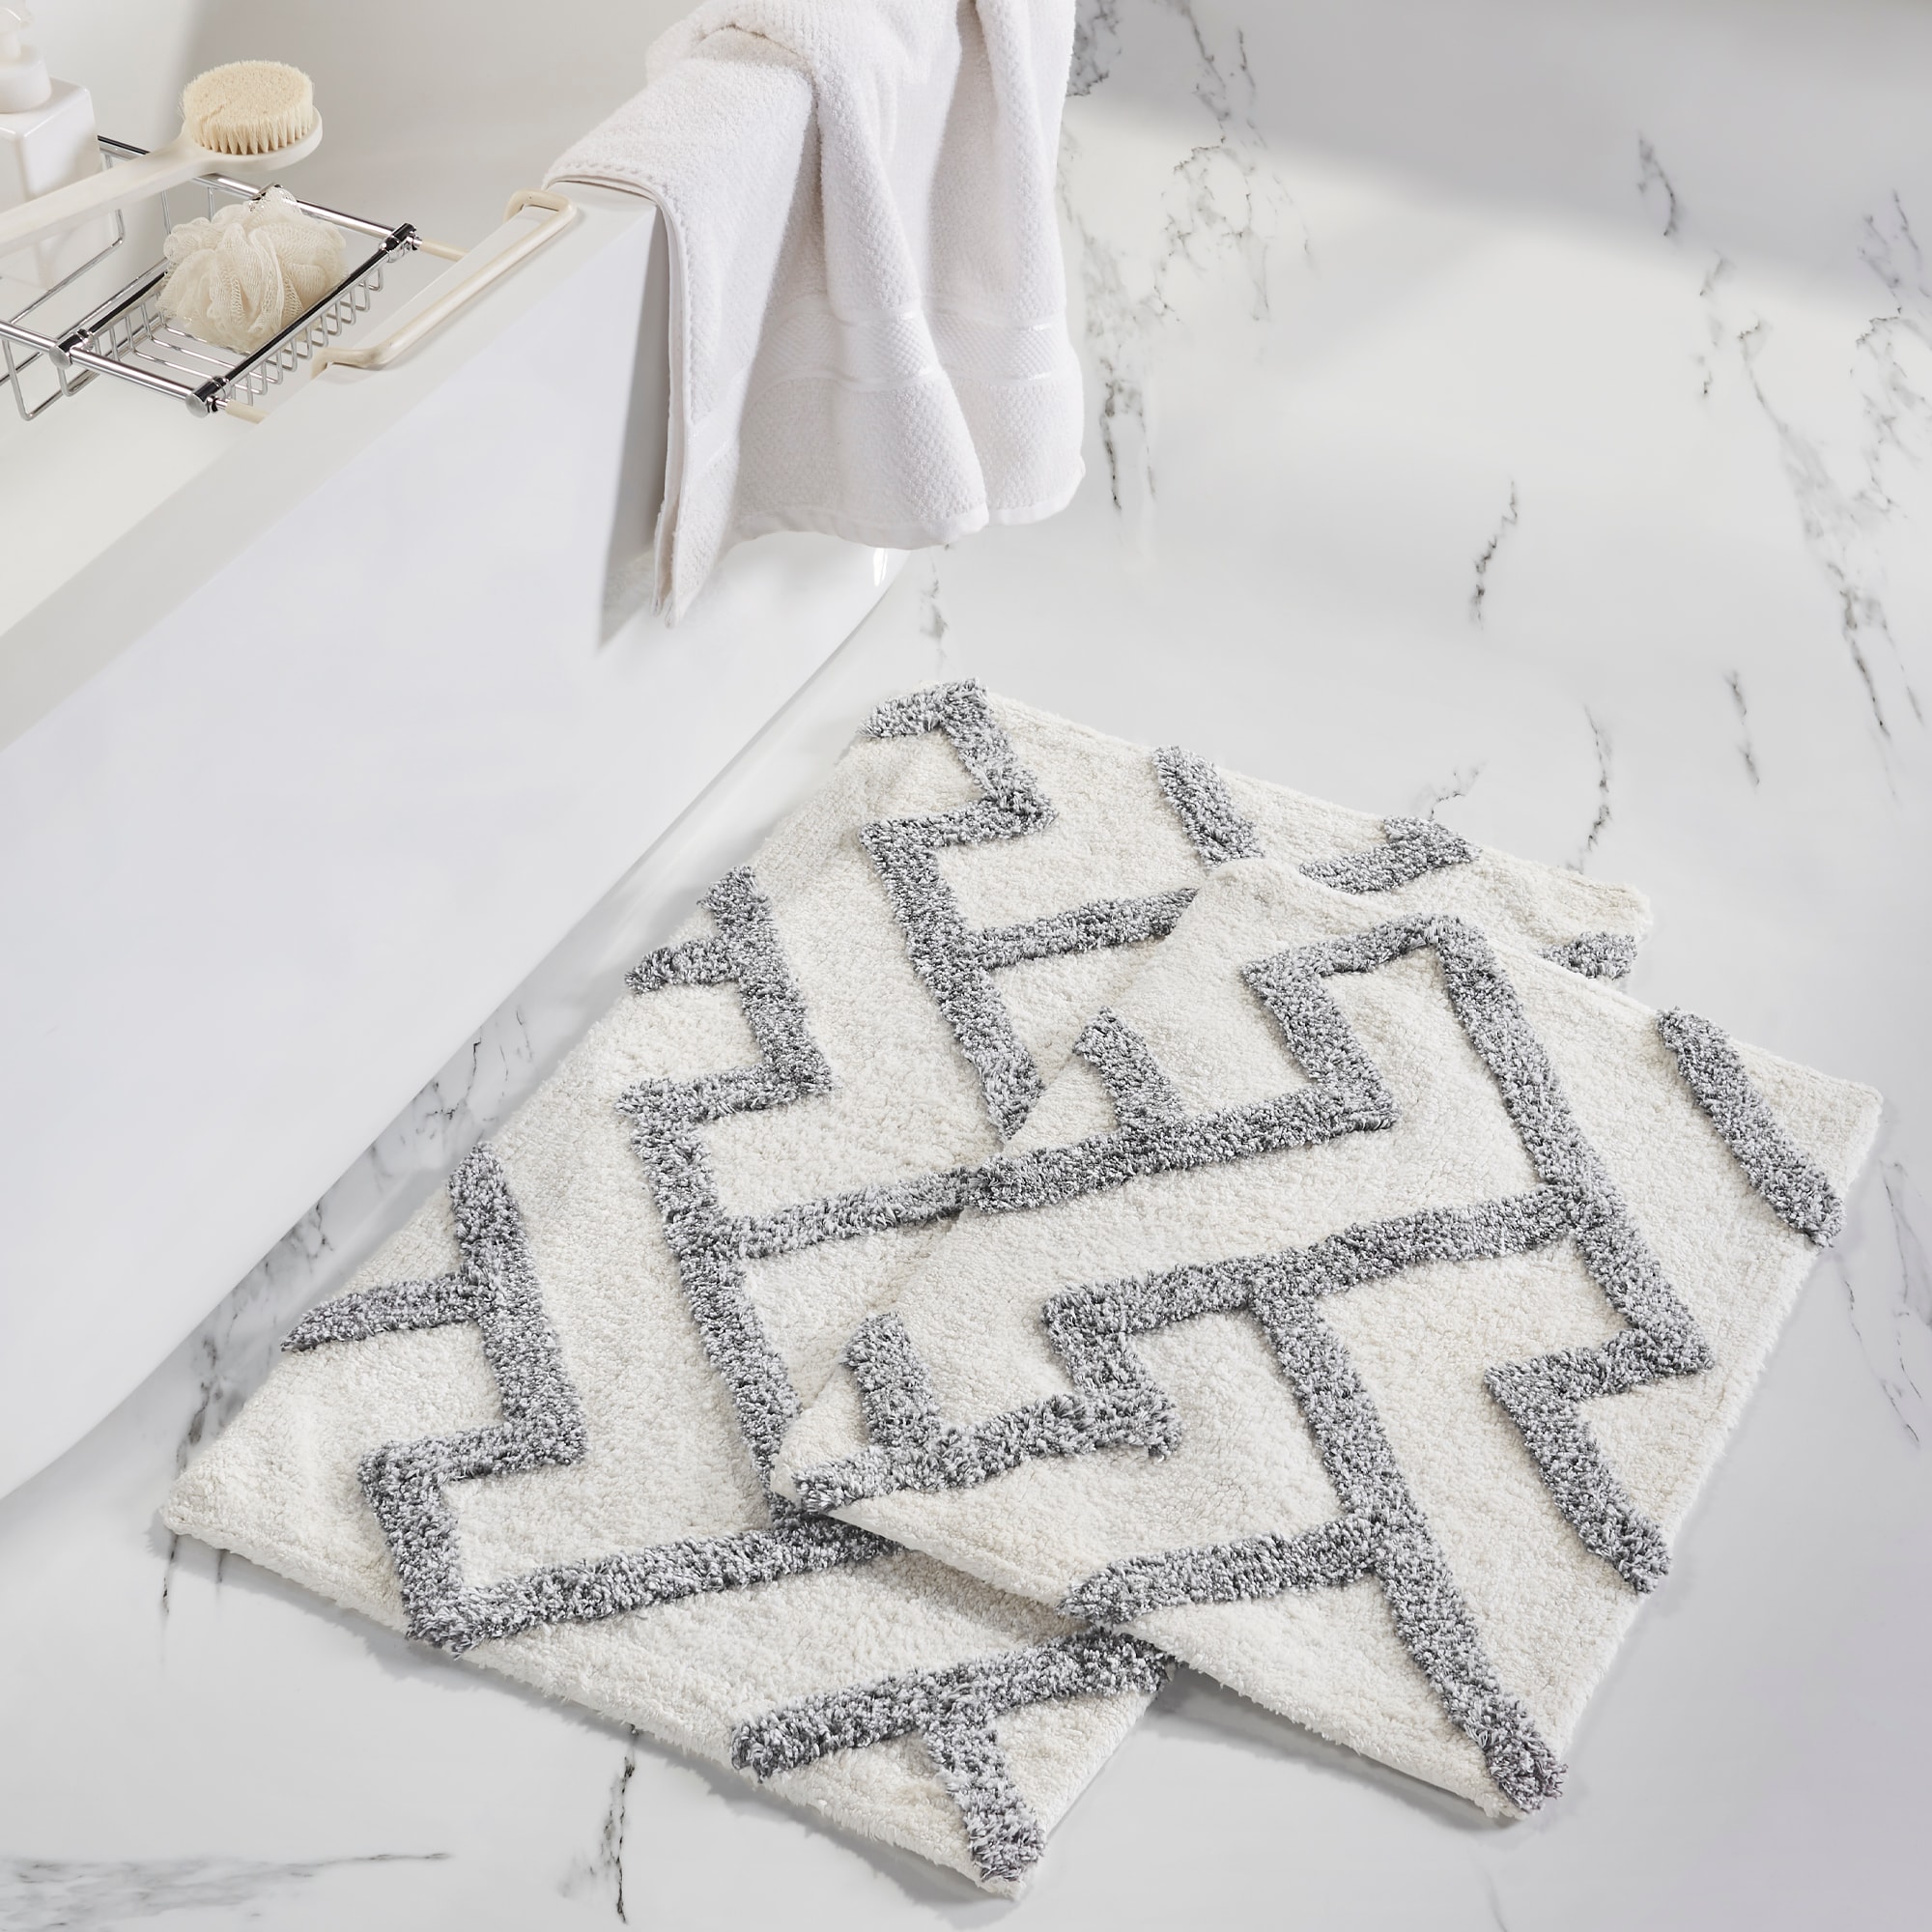 Amrapur Overseas Textured Bath Mat Set, Charcoal Gray Bathroom Rug Set